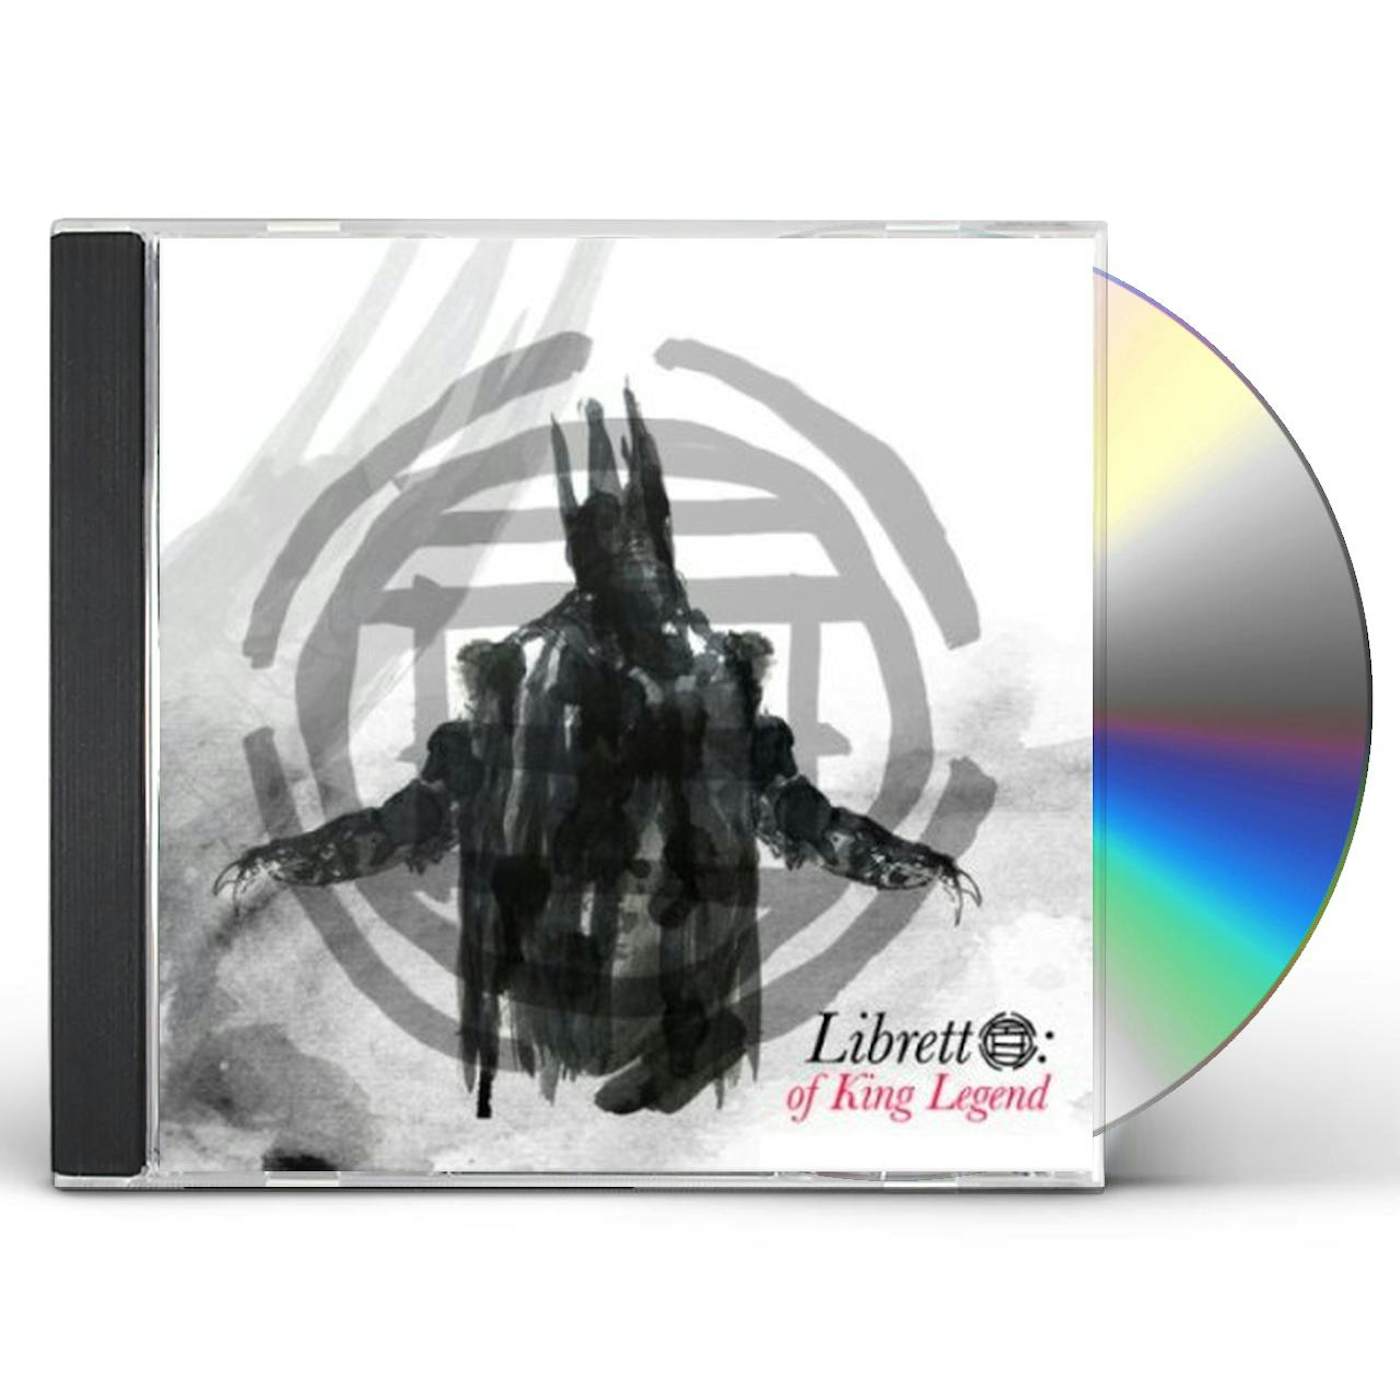 The Black Opera LIBRETTO: OF KING LEGEND CD